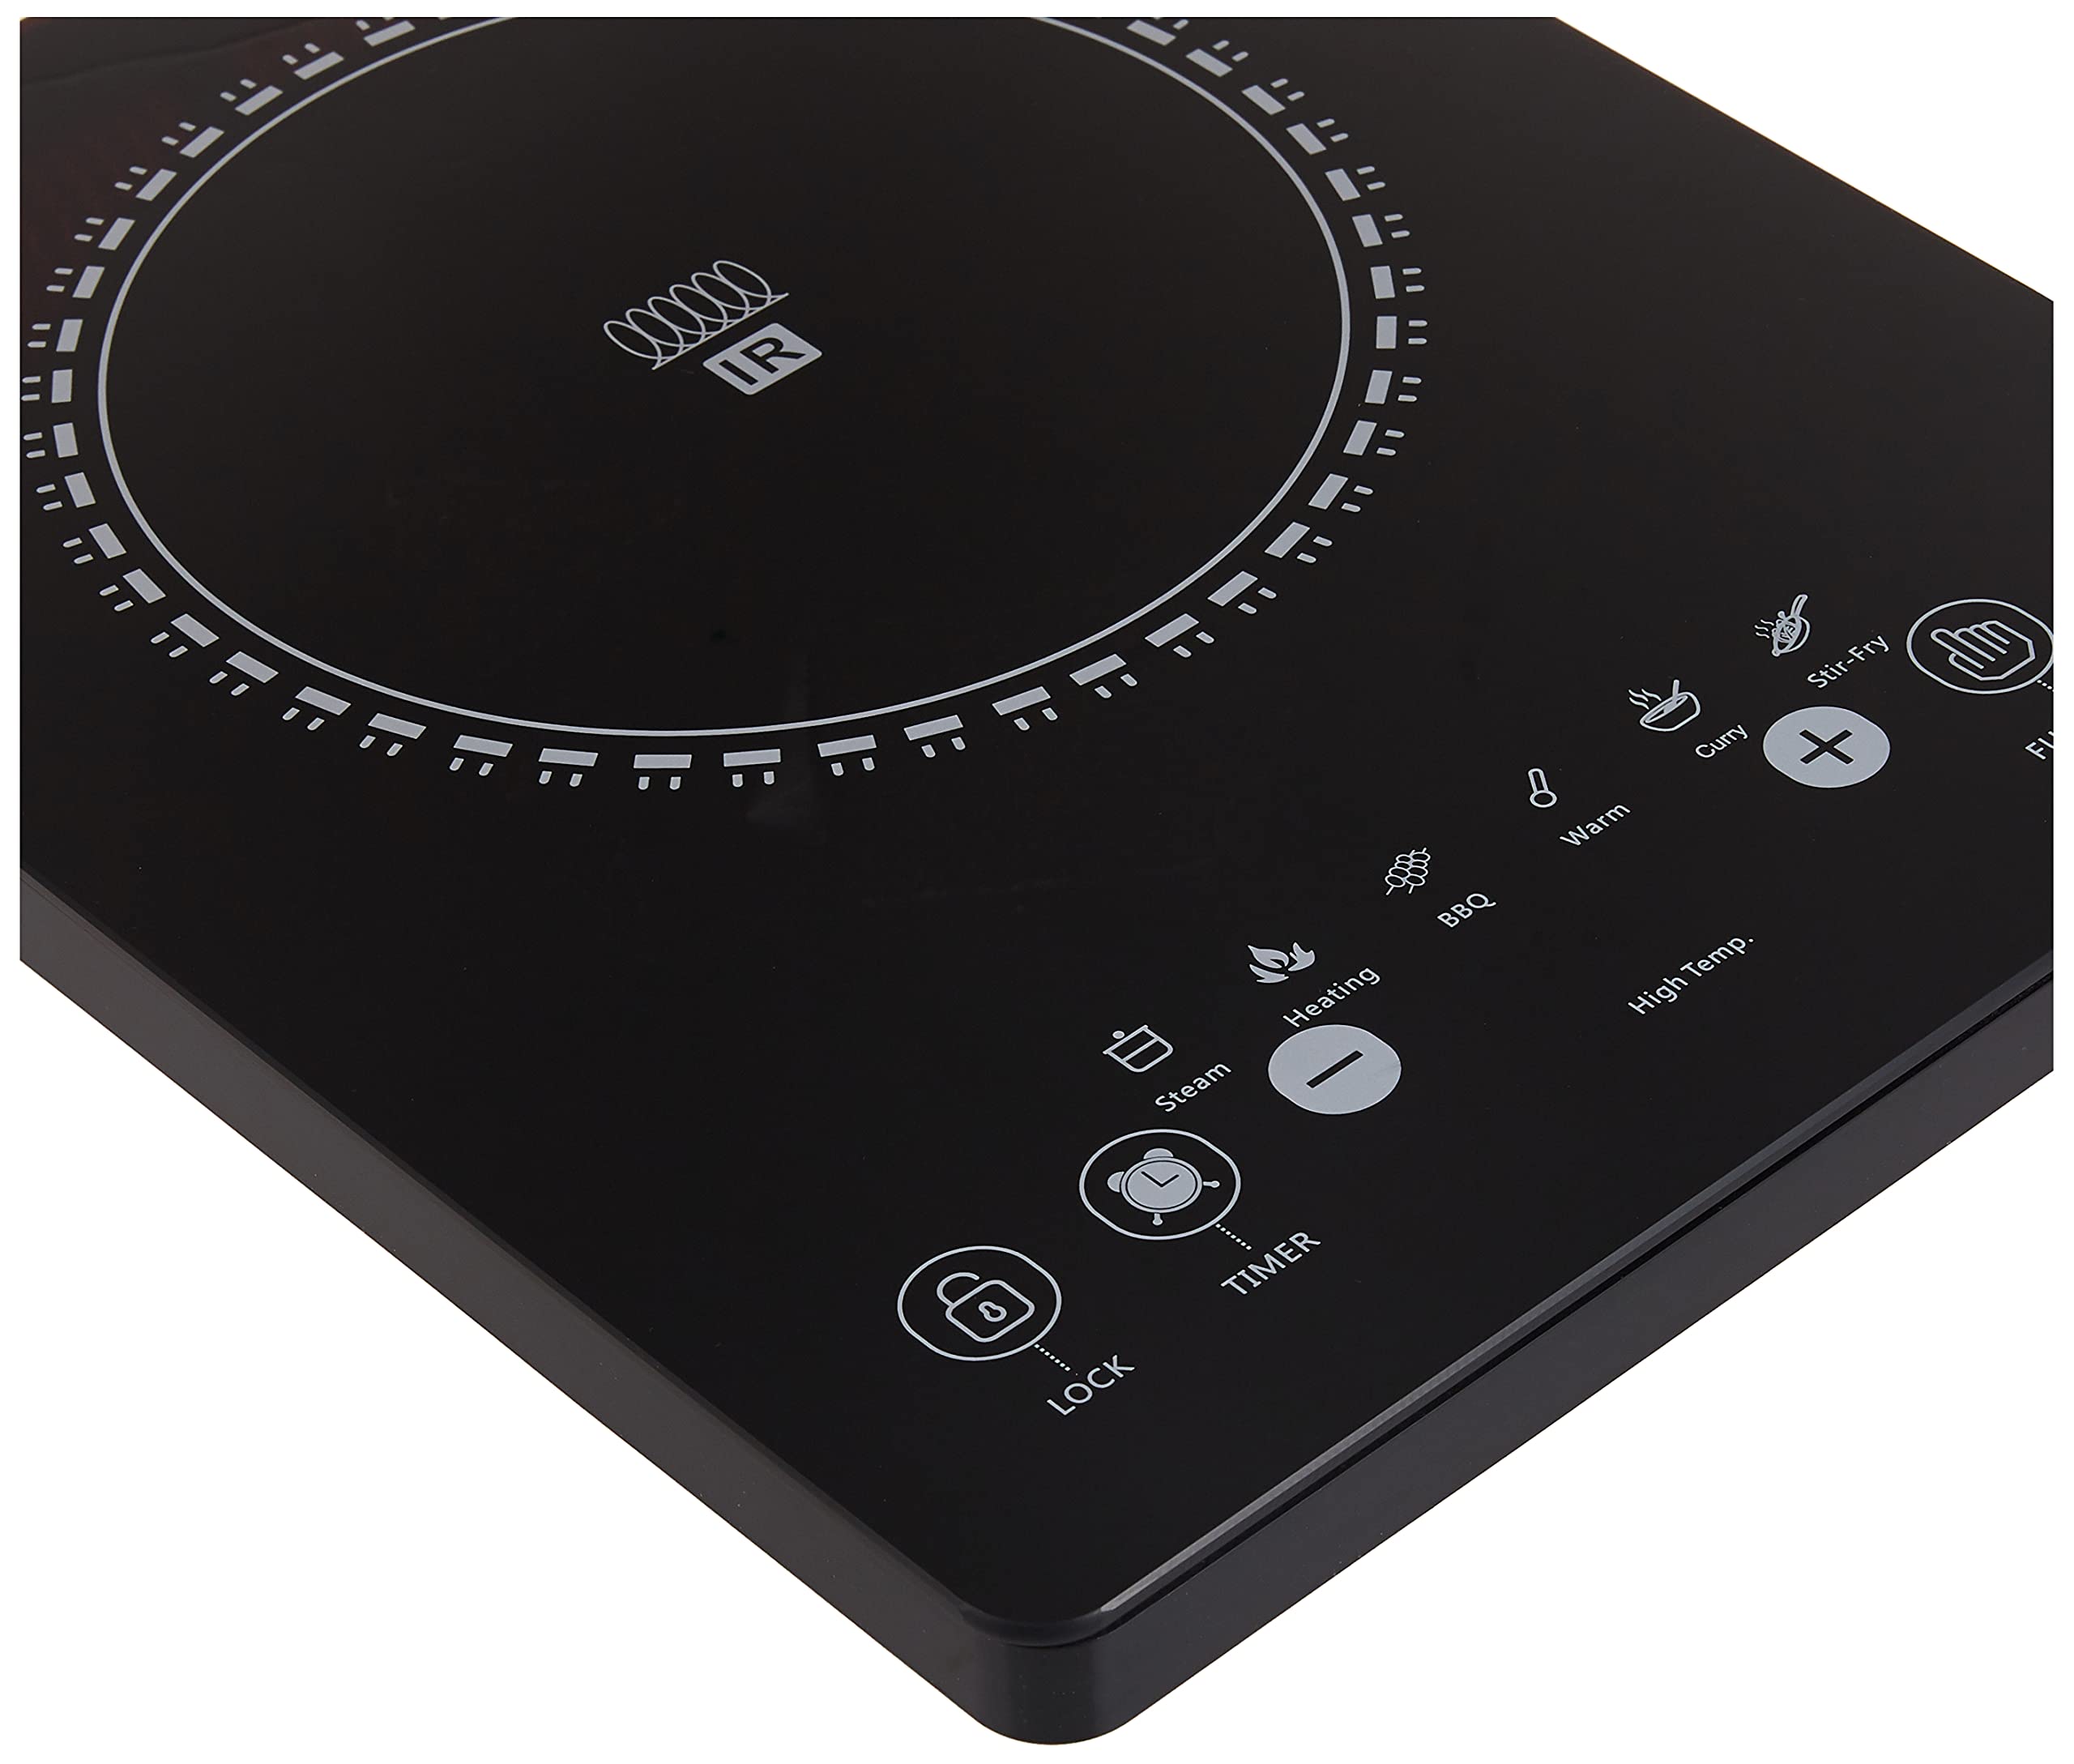 Prestige Infrared Single Cooktop, 8 Digital Temp Control, Touch Control, 2000 Watts, Black  موقد فردي يعمل بالأشعة تحت الحمراء بقدرة 2000 وات، بلون أسود، ووزن 3.1 كغم، PR7505 من برستيج